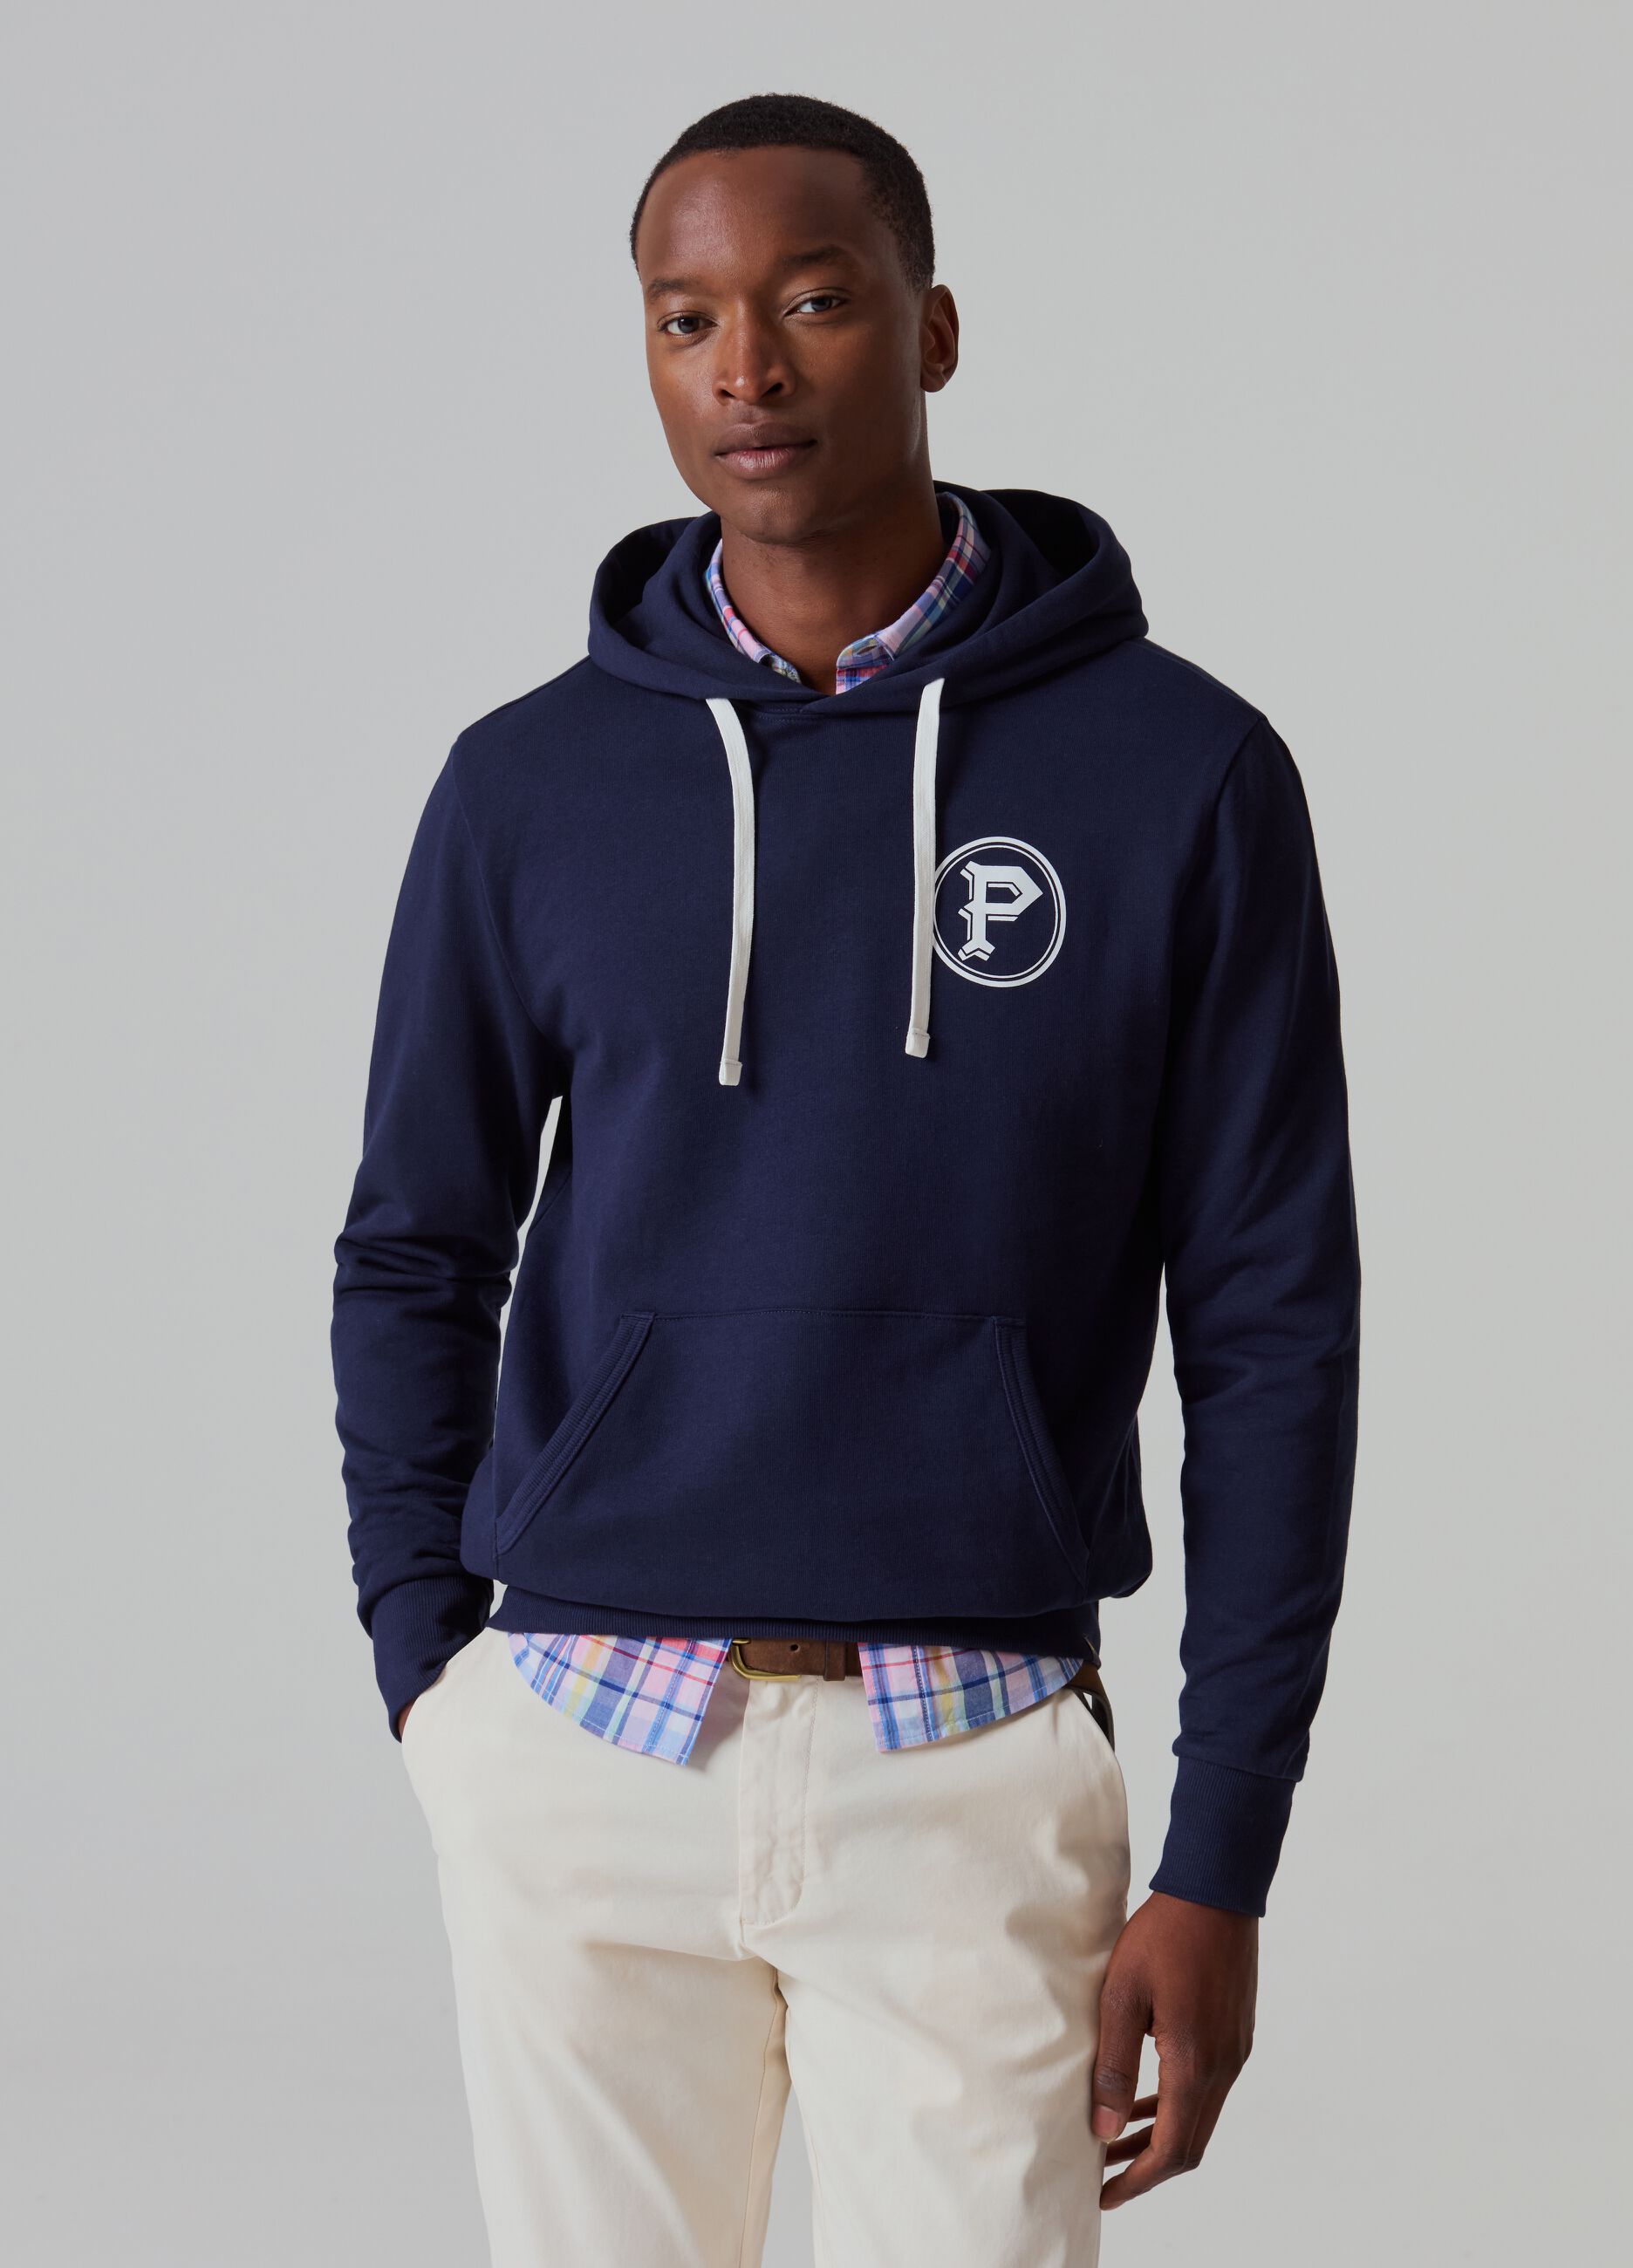 Italian Men's Sweatshirts & Hoodies | PIOMBO